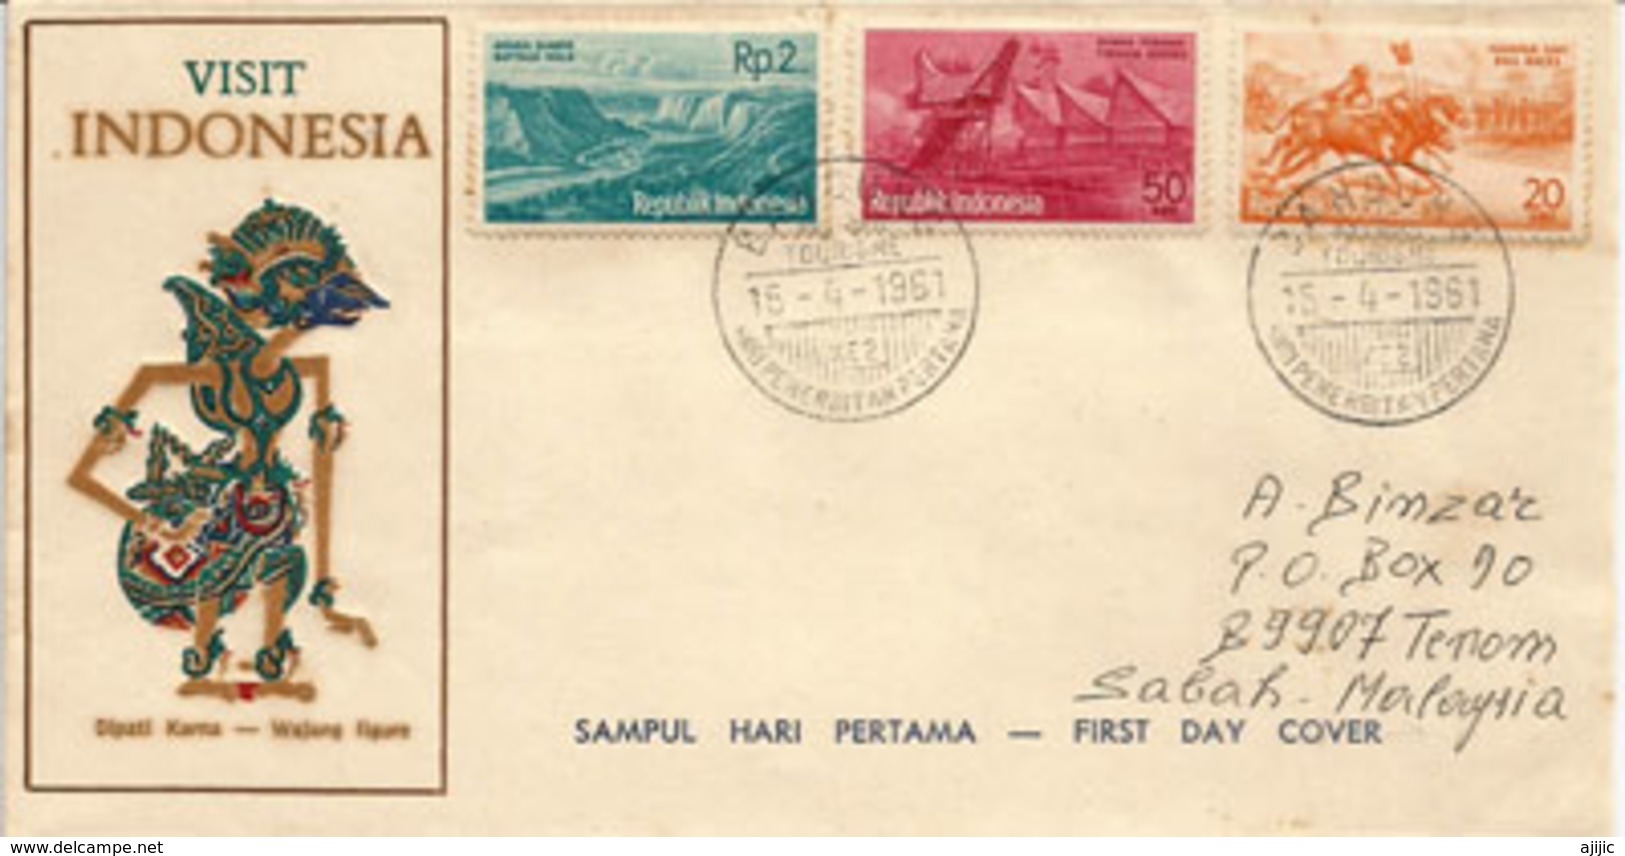 Visit Indonesia 1961.Hindu Sun God Karna., FDC Letter Bandung.Indonesia, Addressed To Sabah.Malaysia - Hindouisme